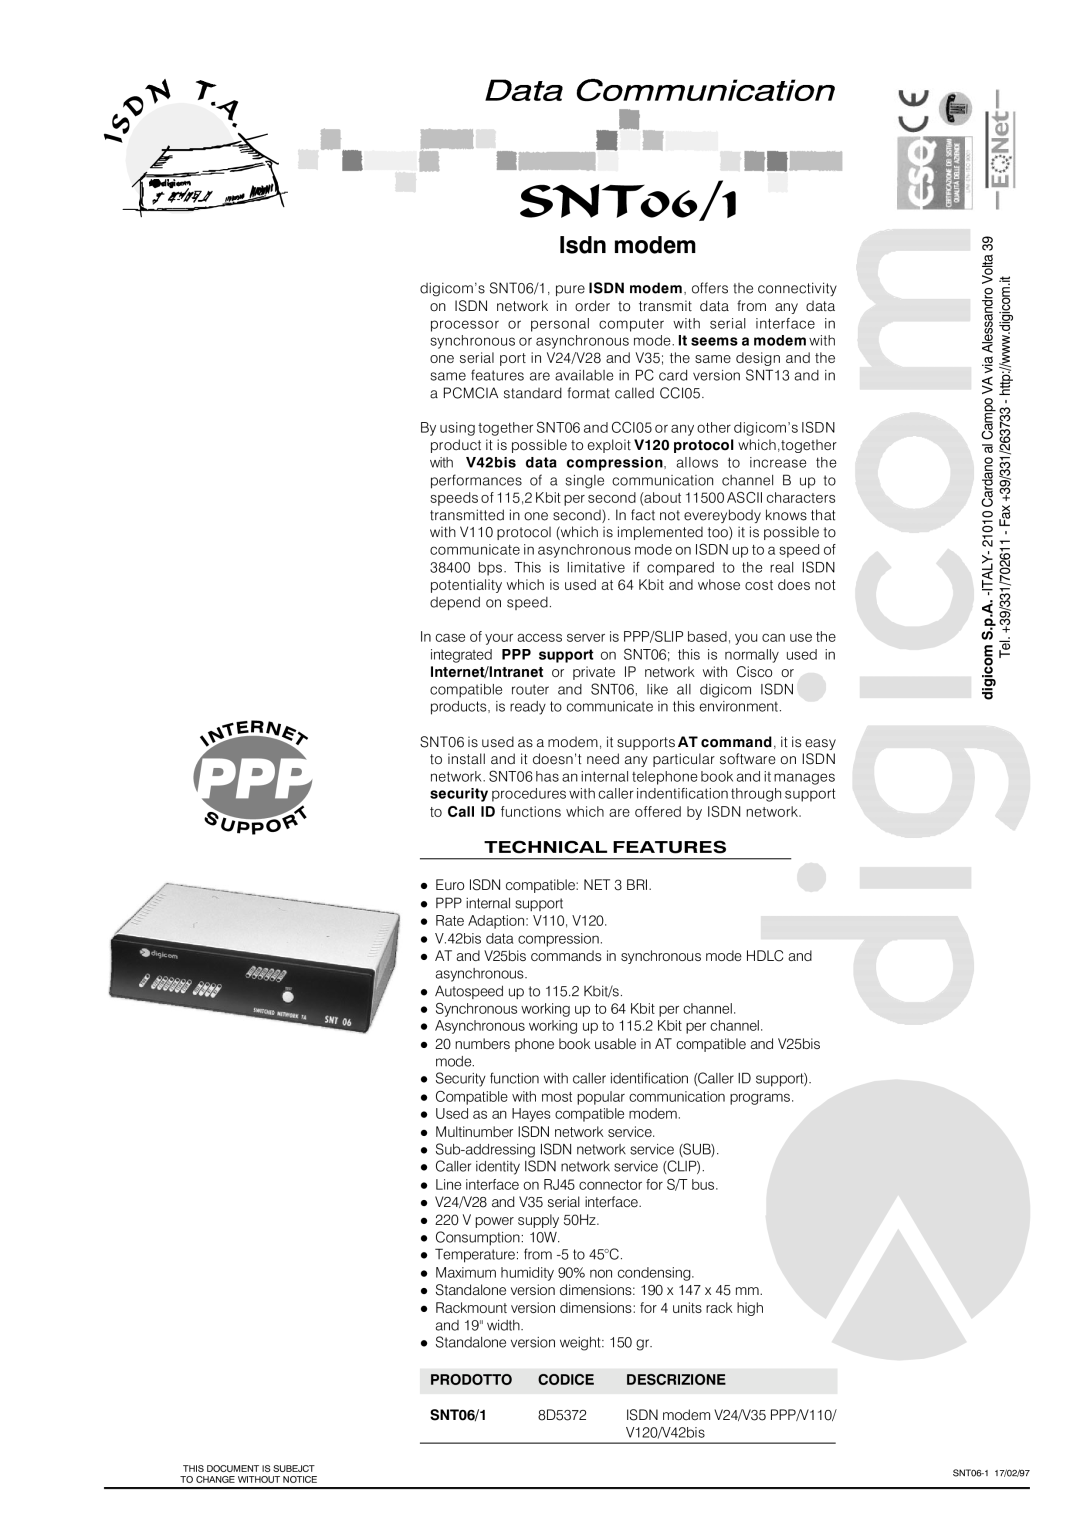 Digicom SNT06/1 dimensions Data Communication, Isdn modem, U Ppo, Technical Features 